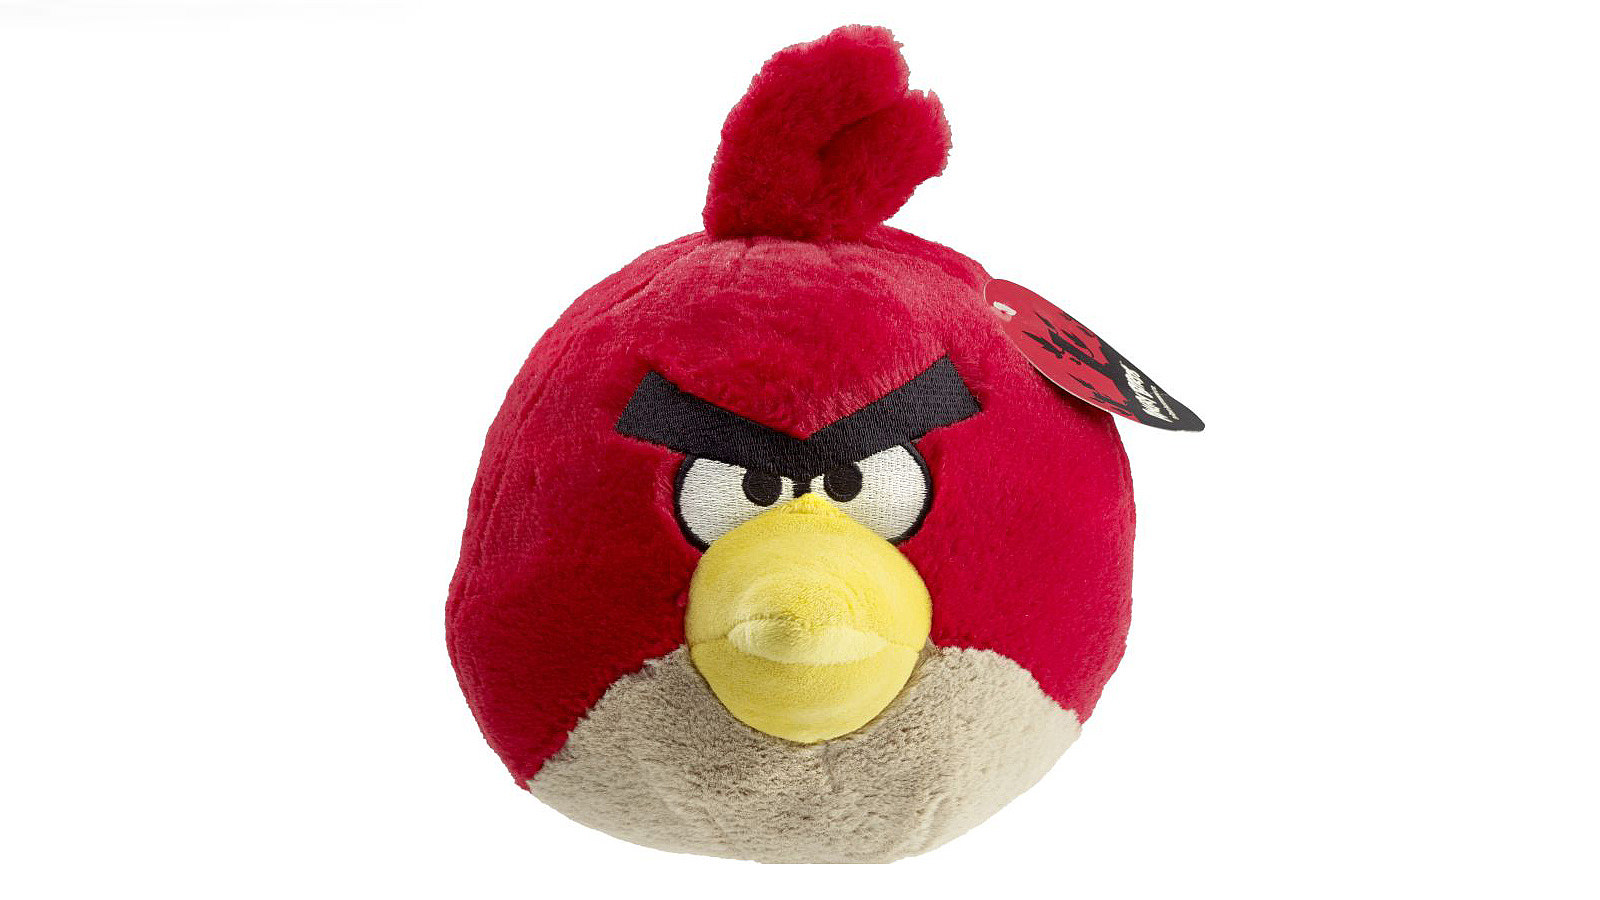 Plüschfigur Angry Bird, 2014